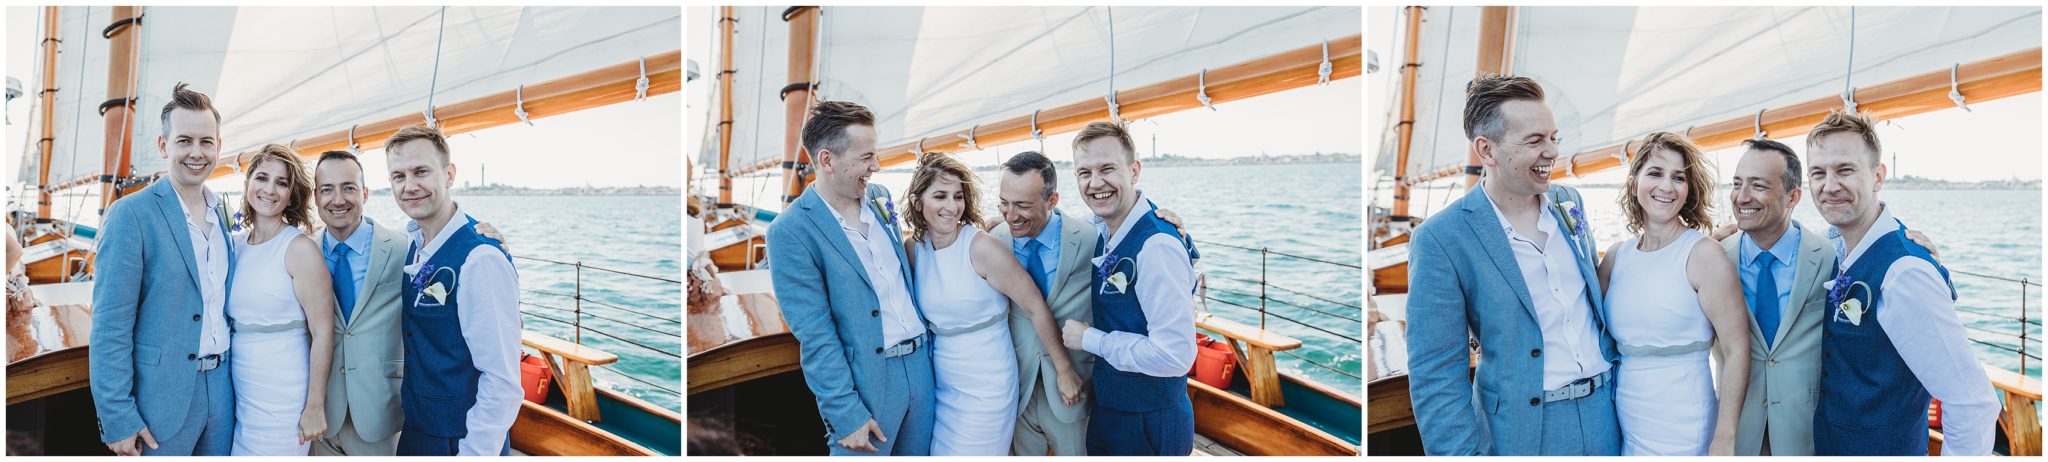 wedding party laughing - boston boat wedding photos